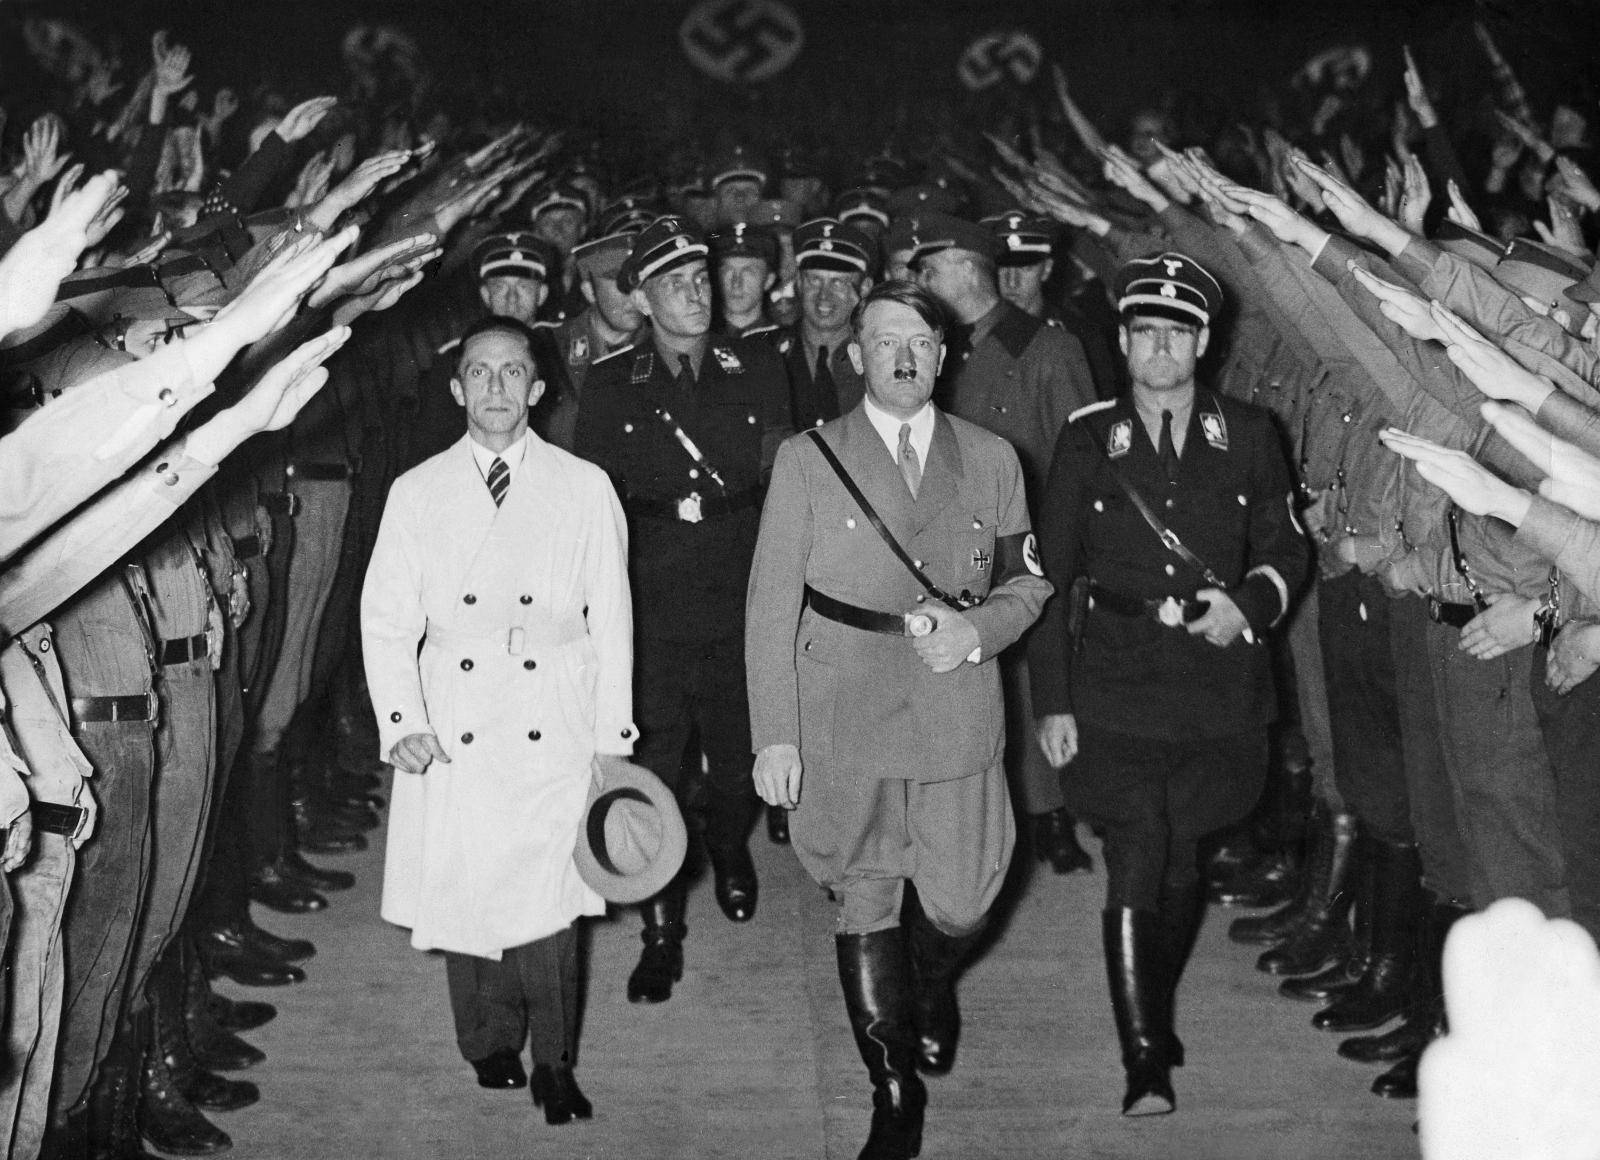 Germany, Politics: Rudolf Hess, Adolf Hitler and Joseph Goebbels (f.r.) during campaign rally at Berliner Sportpalast
- 24.10.1933
- Published by 'Berliner Morgenpost' 25.10.1933
- Photographer: Presse-Illustrationen Heinrich Hoffmann